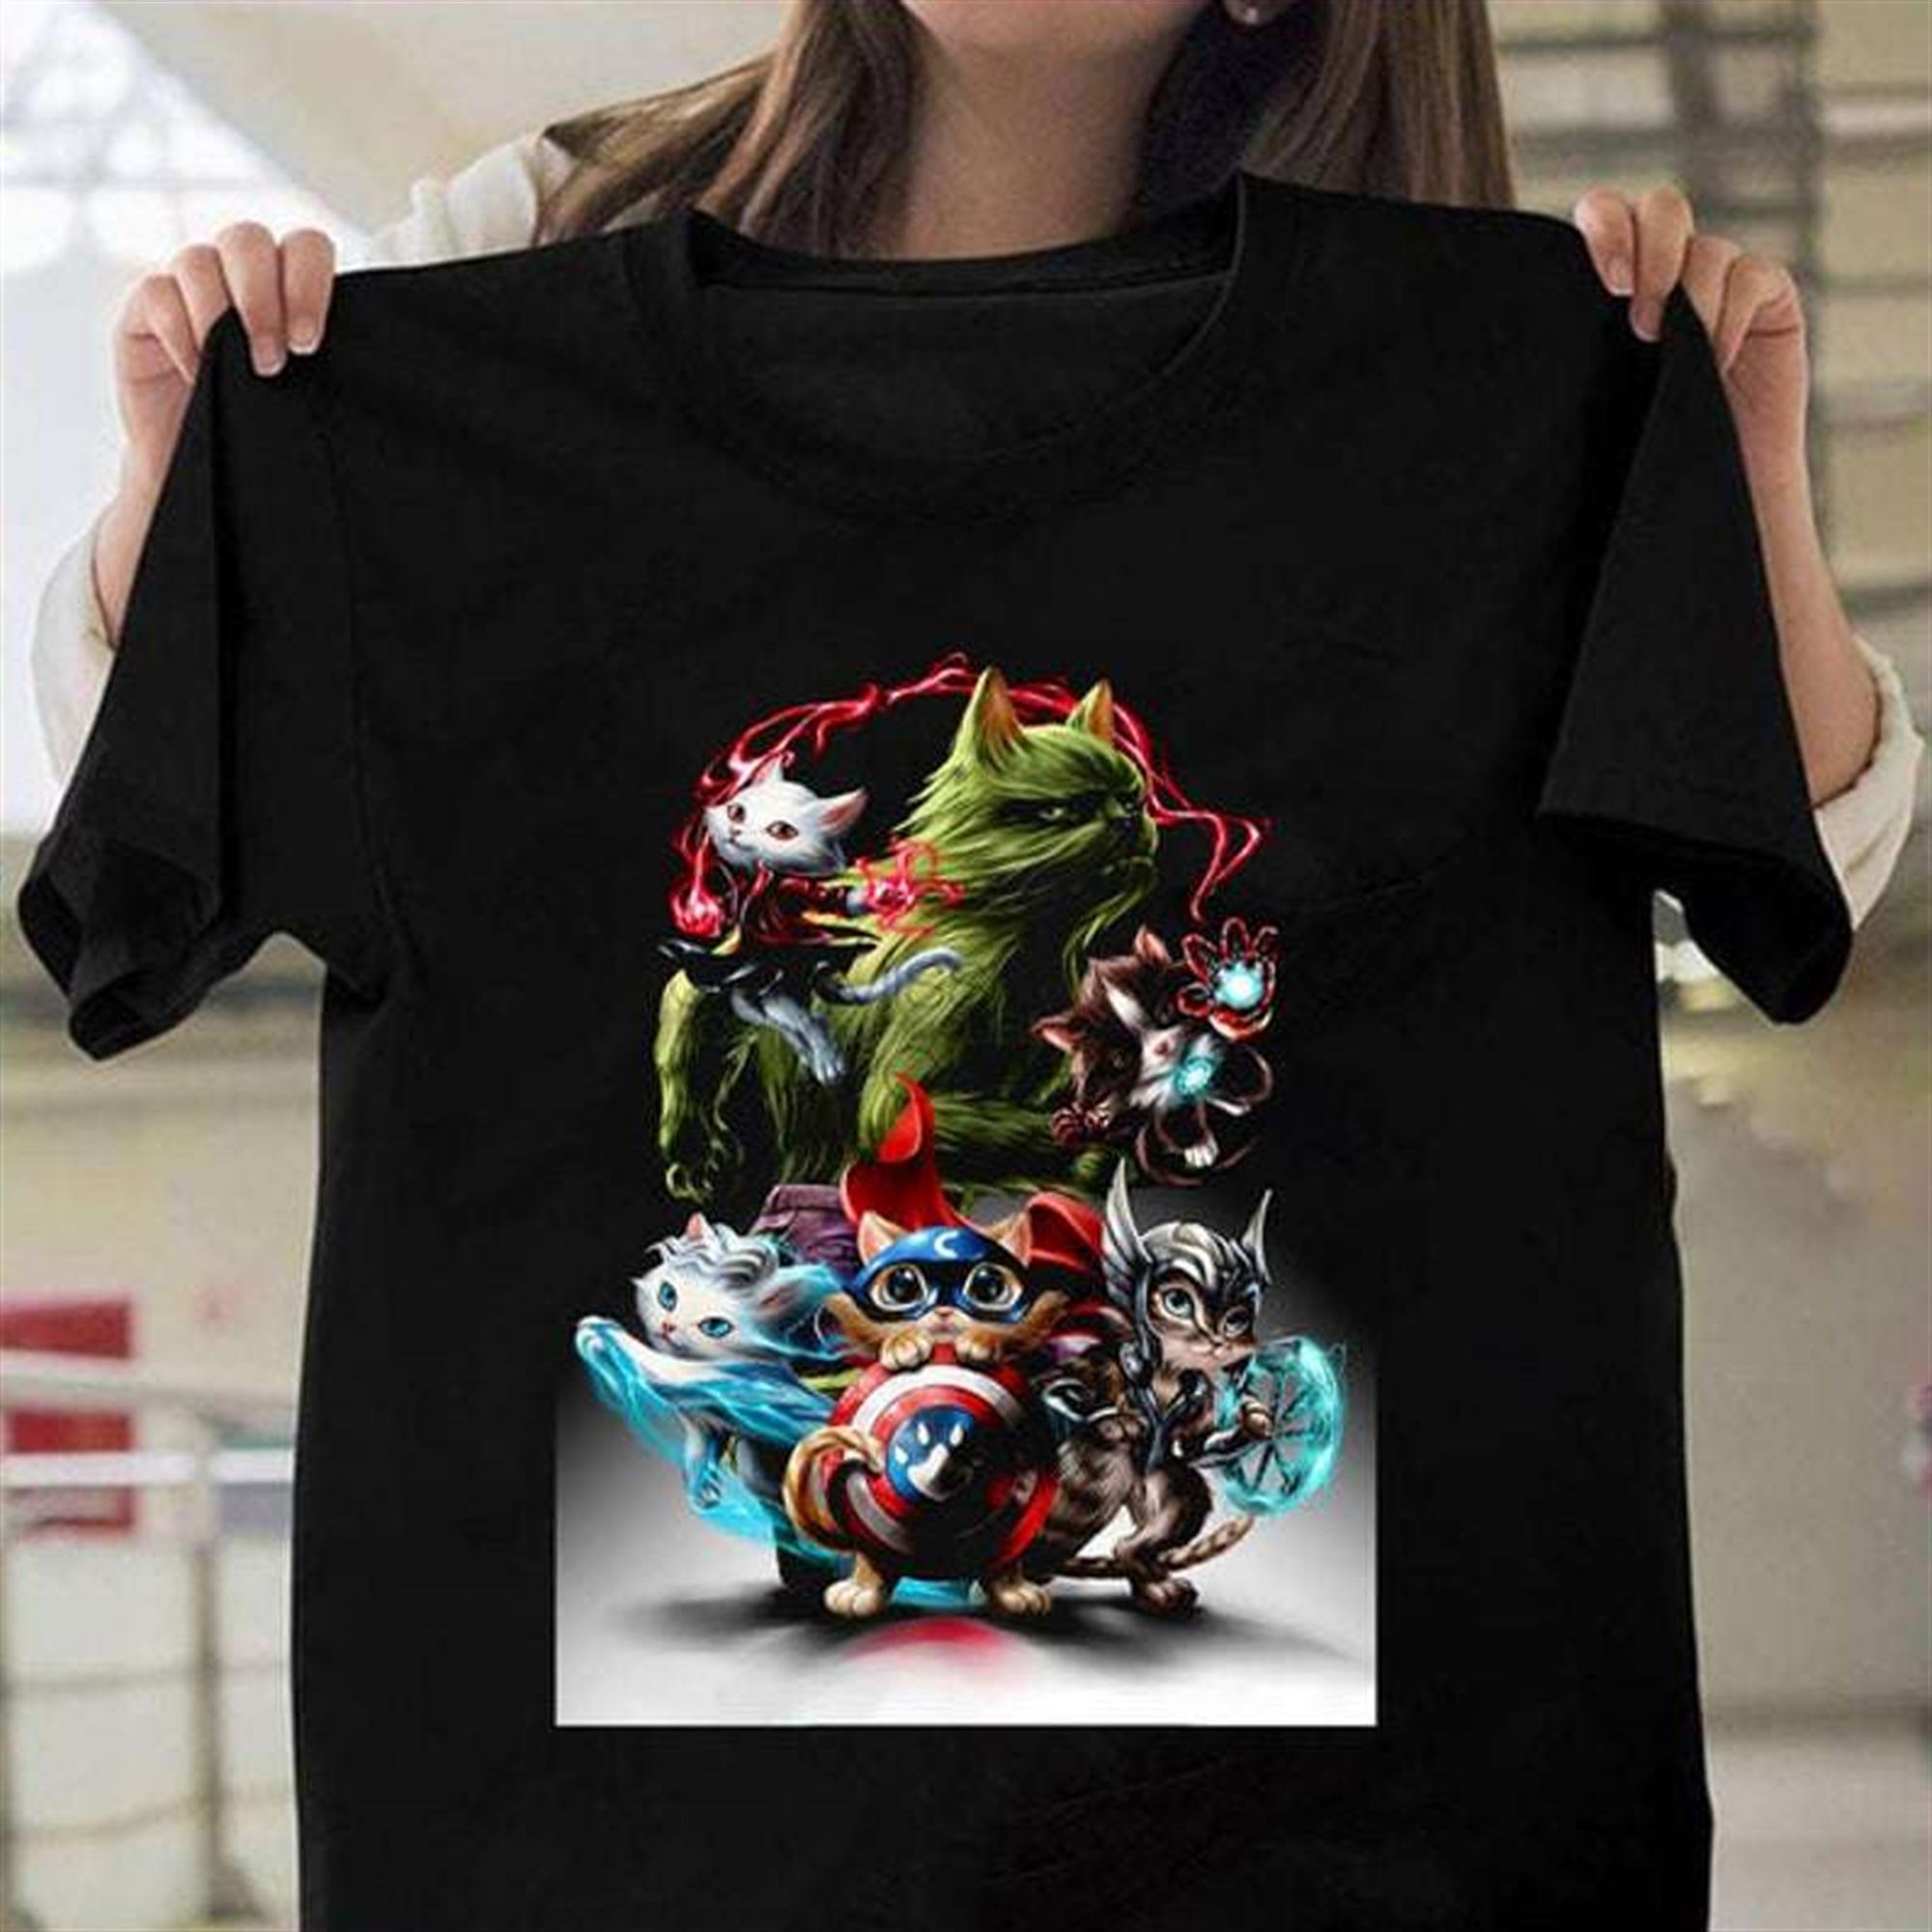 Cat Avengers Endgame T Shirt Full Size Up To 5xl